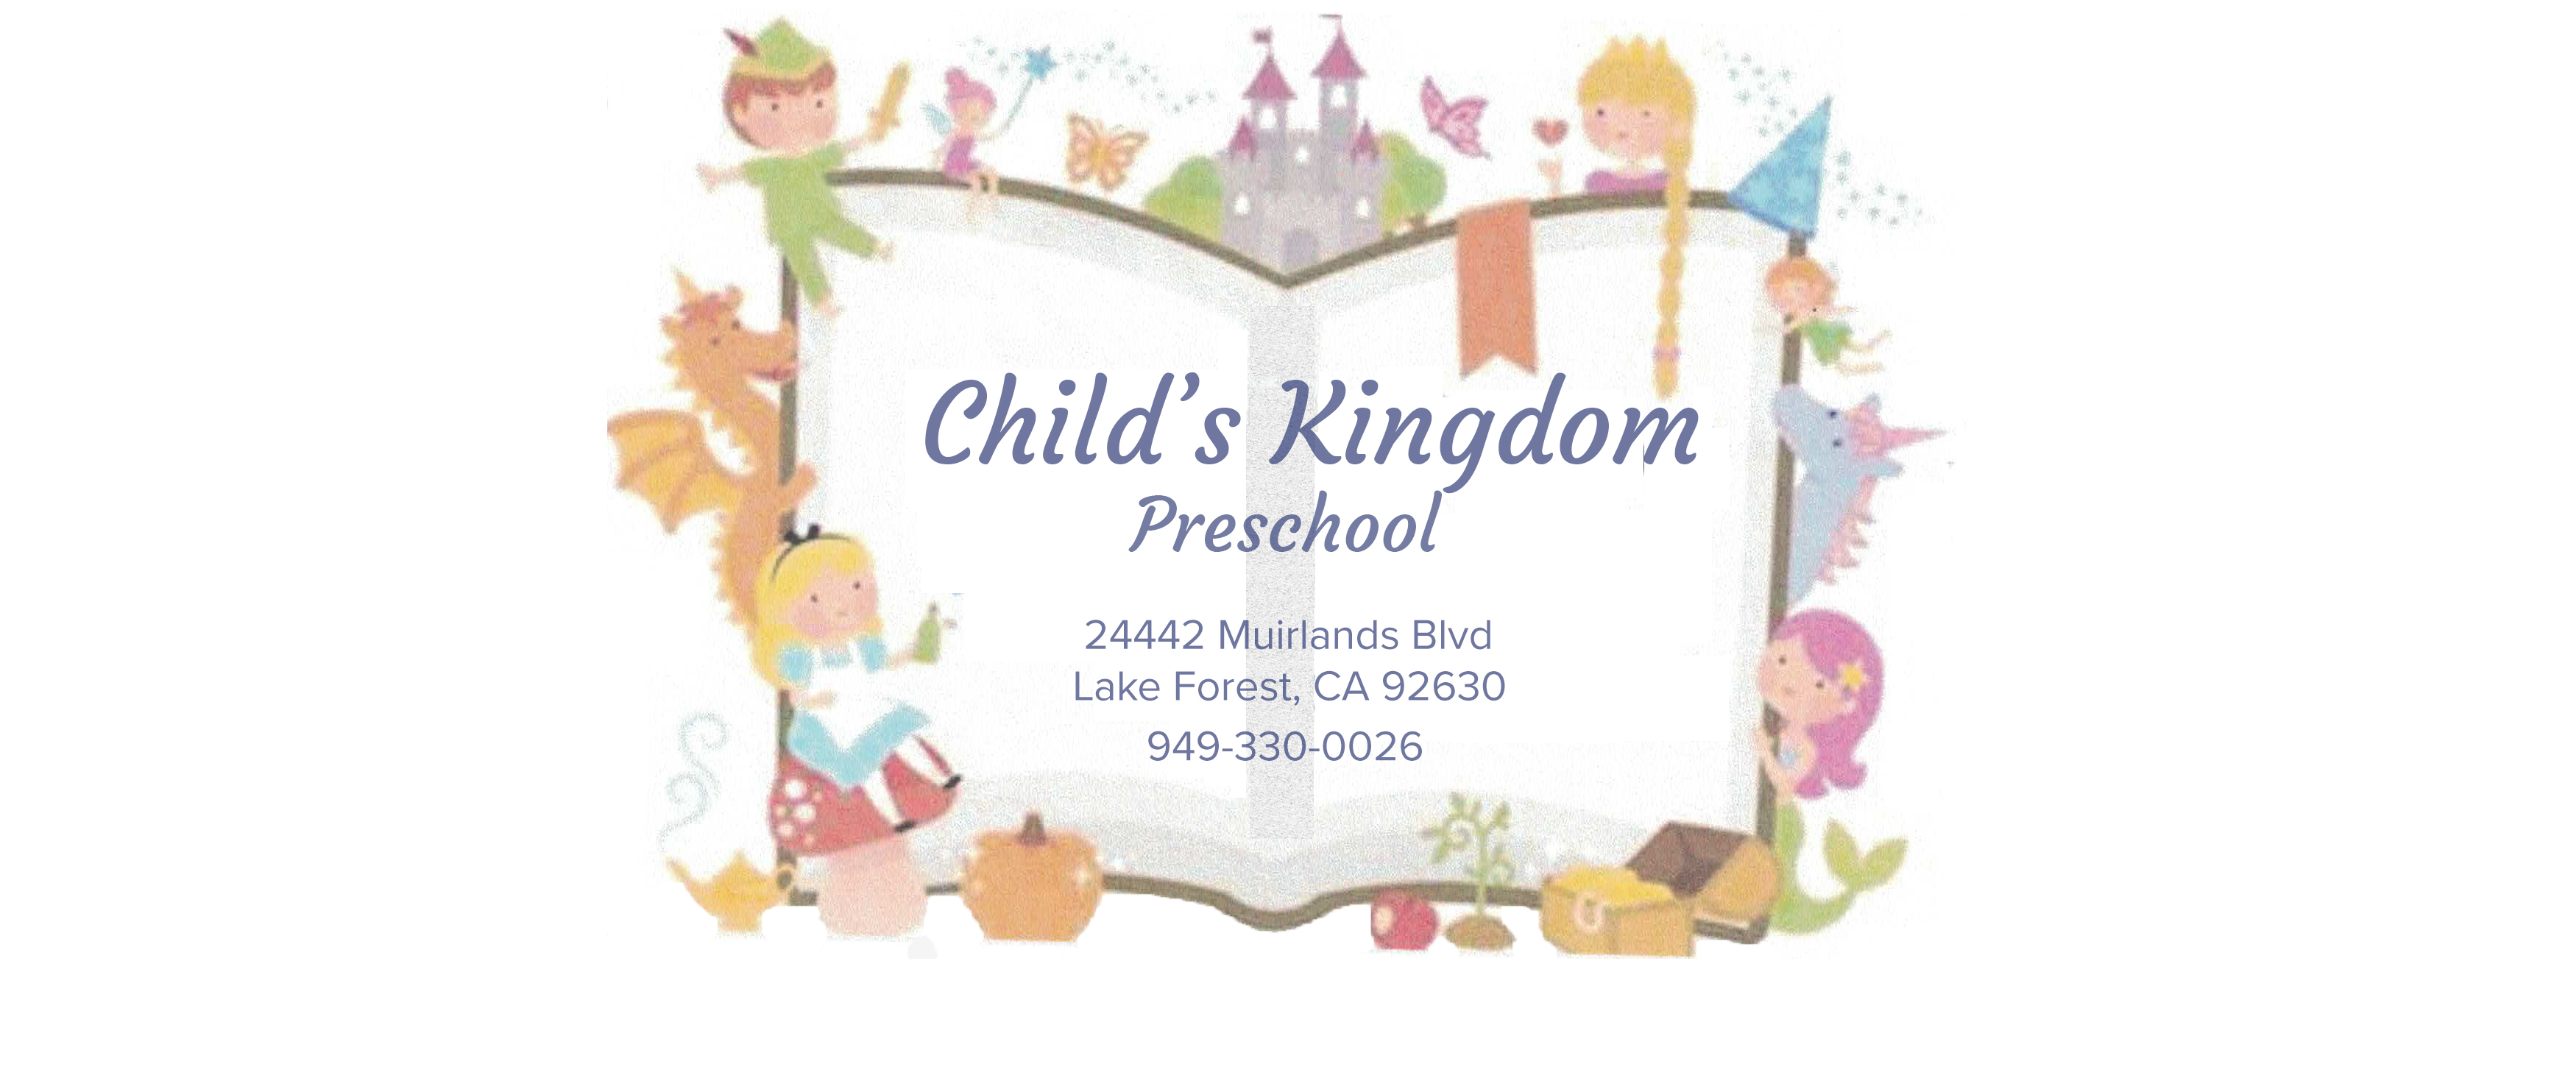 Child's Kingdom Preschool